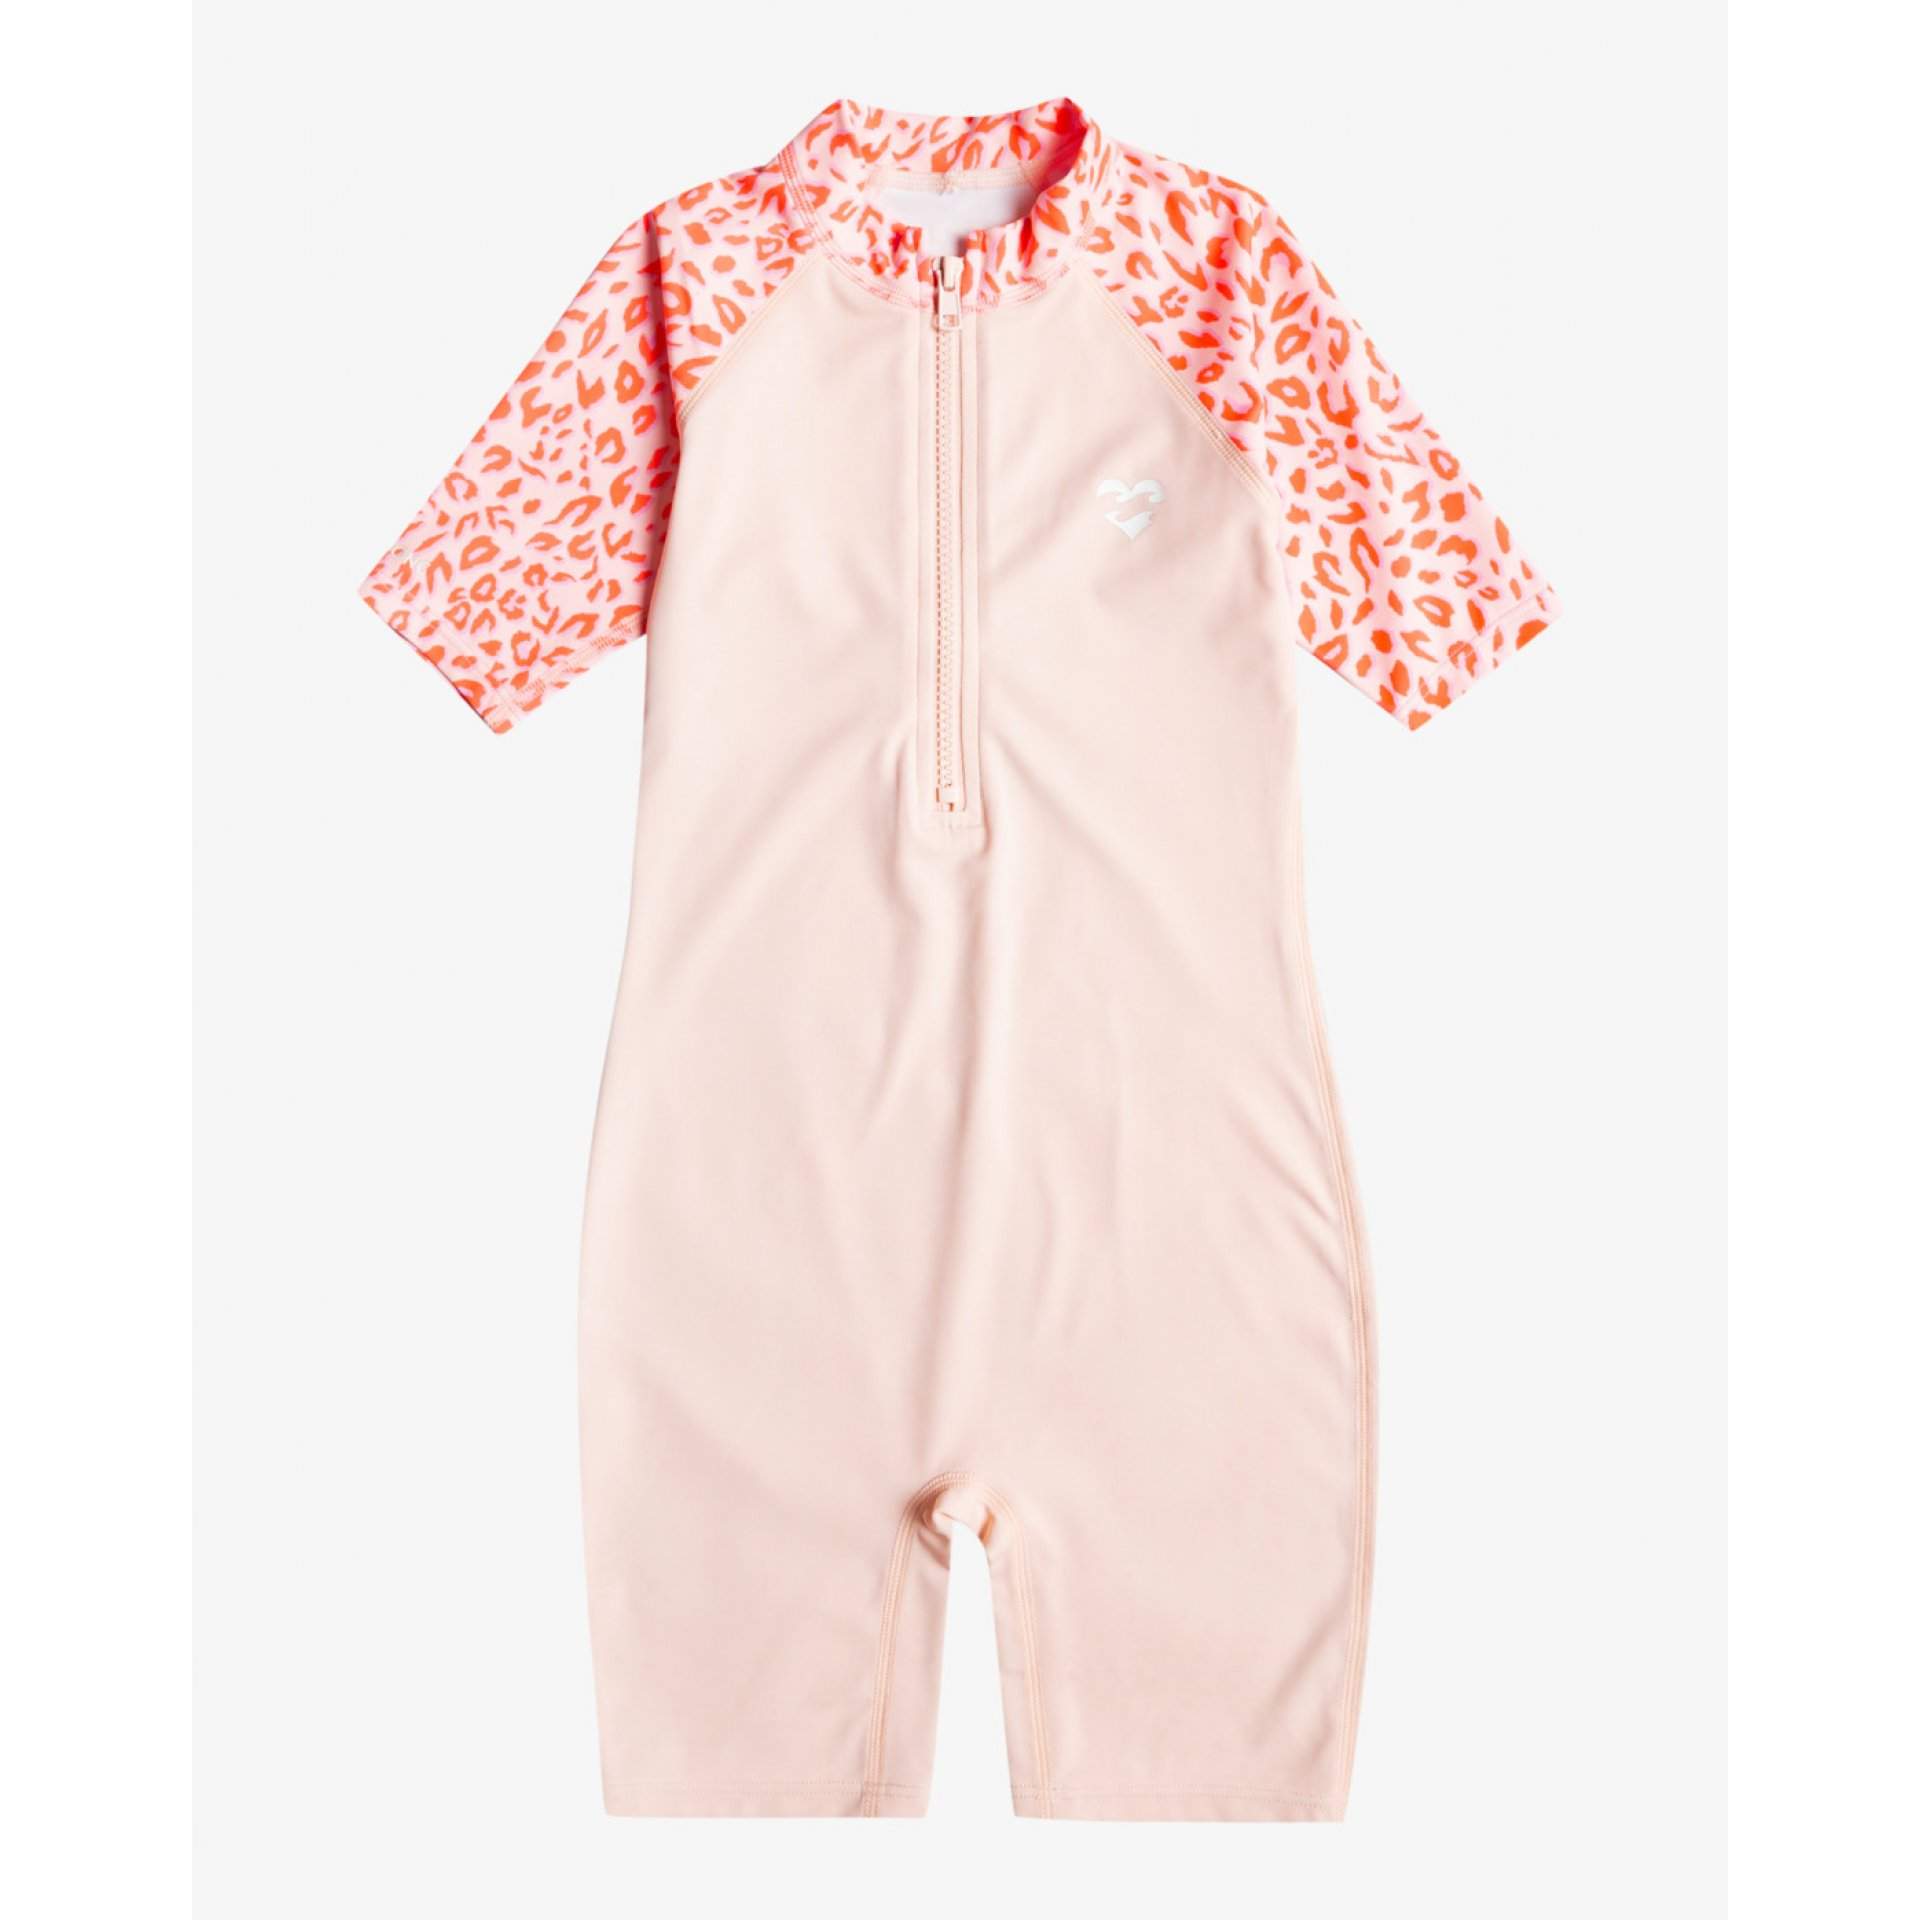 Billabong - UV Rashguard for babies - Short sleeve - Billie logo combi - Just Peachy